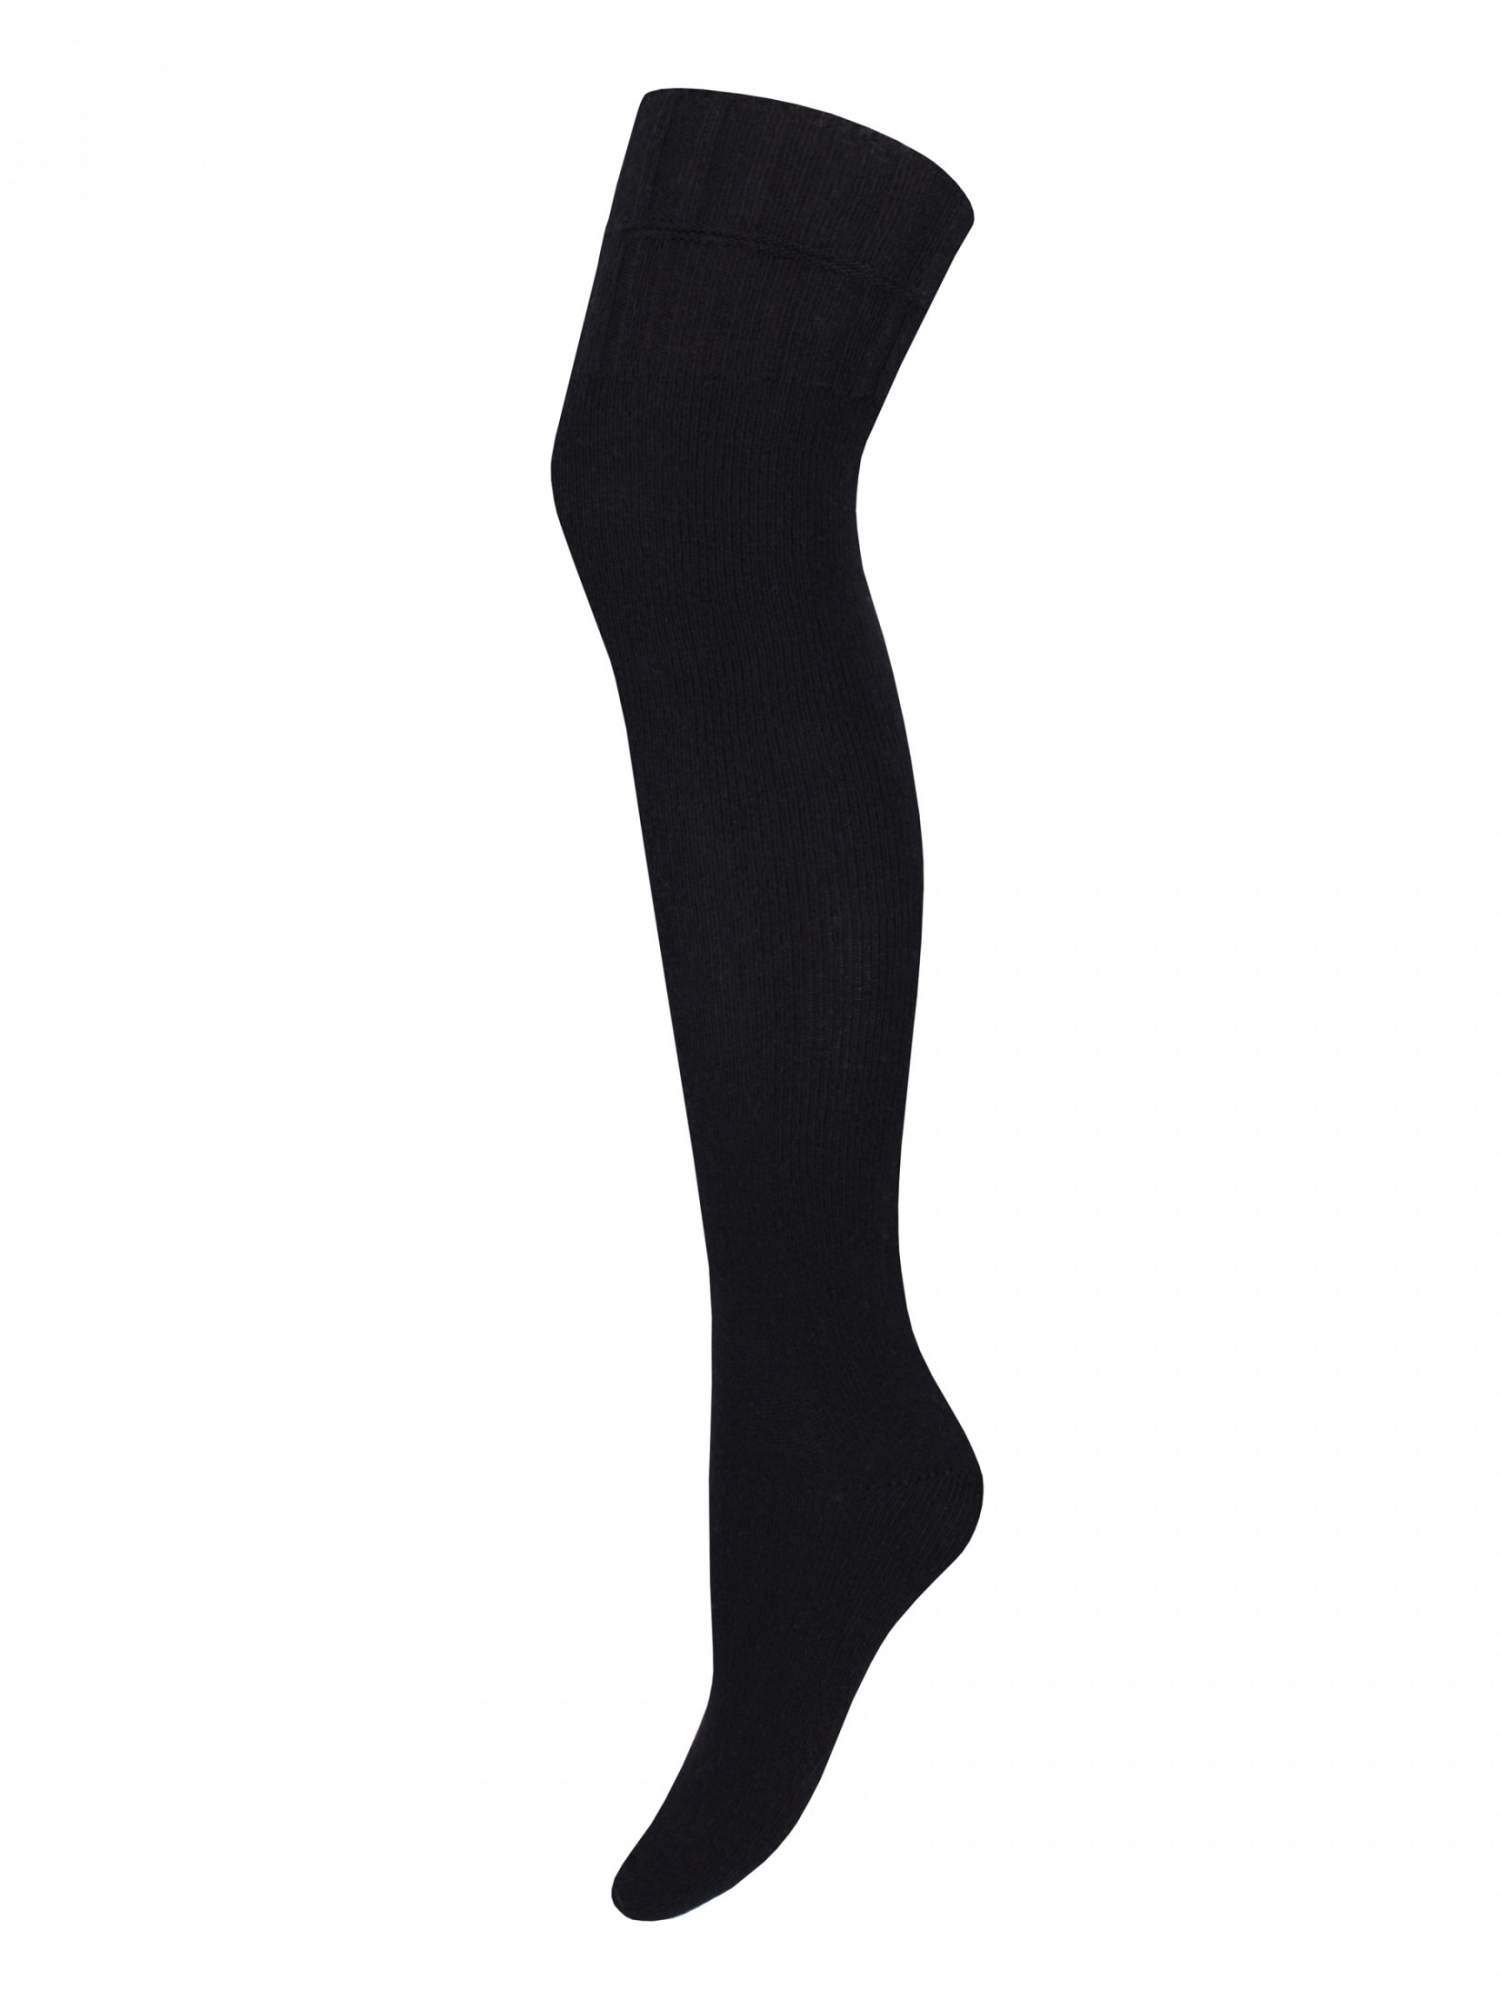 Гольфины женские Mademoiselle 19110 over knee черные one size